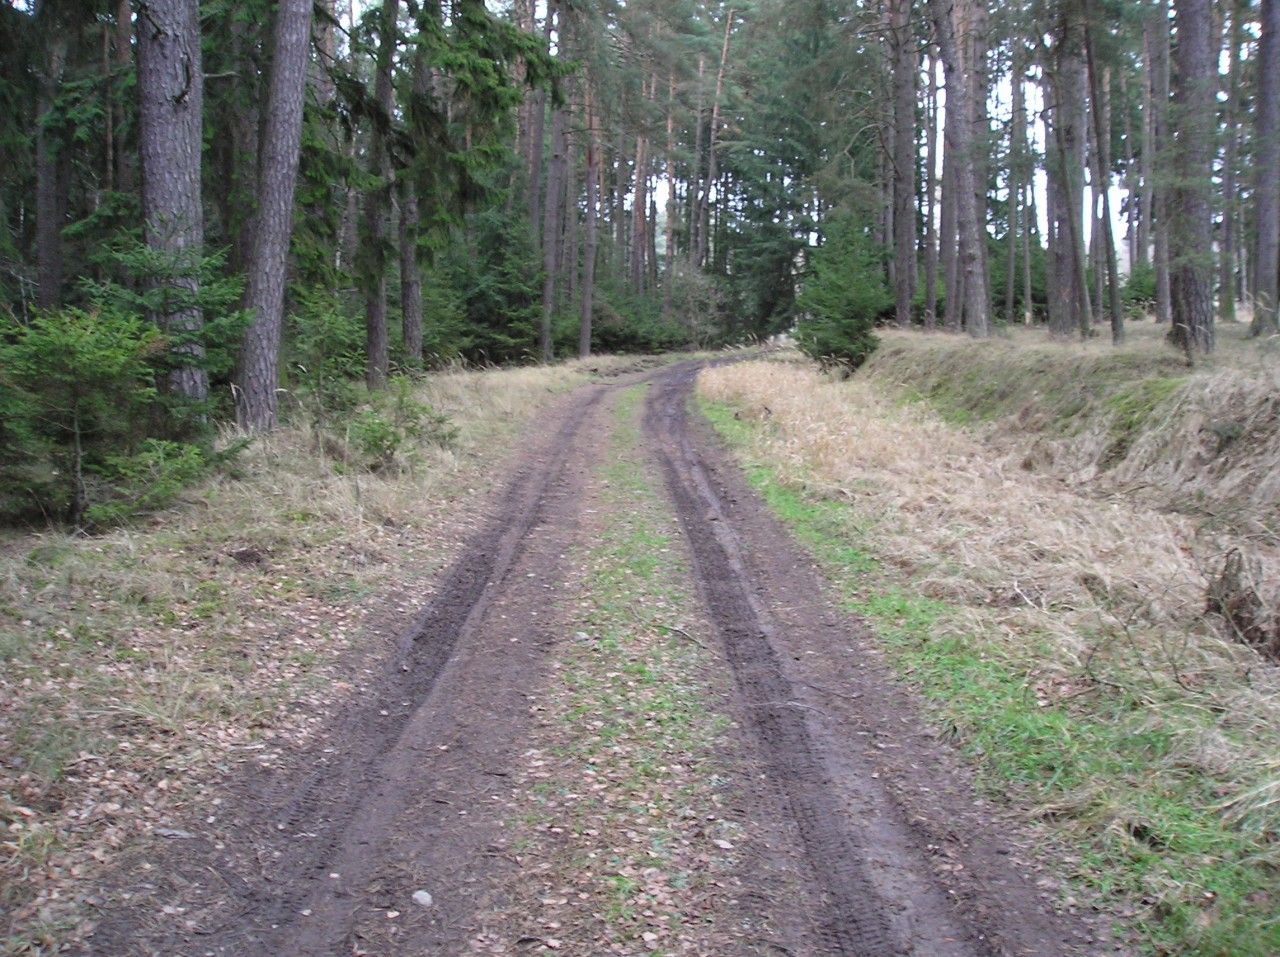 Pokraovn trati ped v lesnm seku ped bvalou zastvkou Borovko.